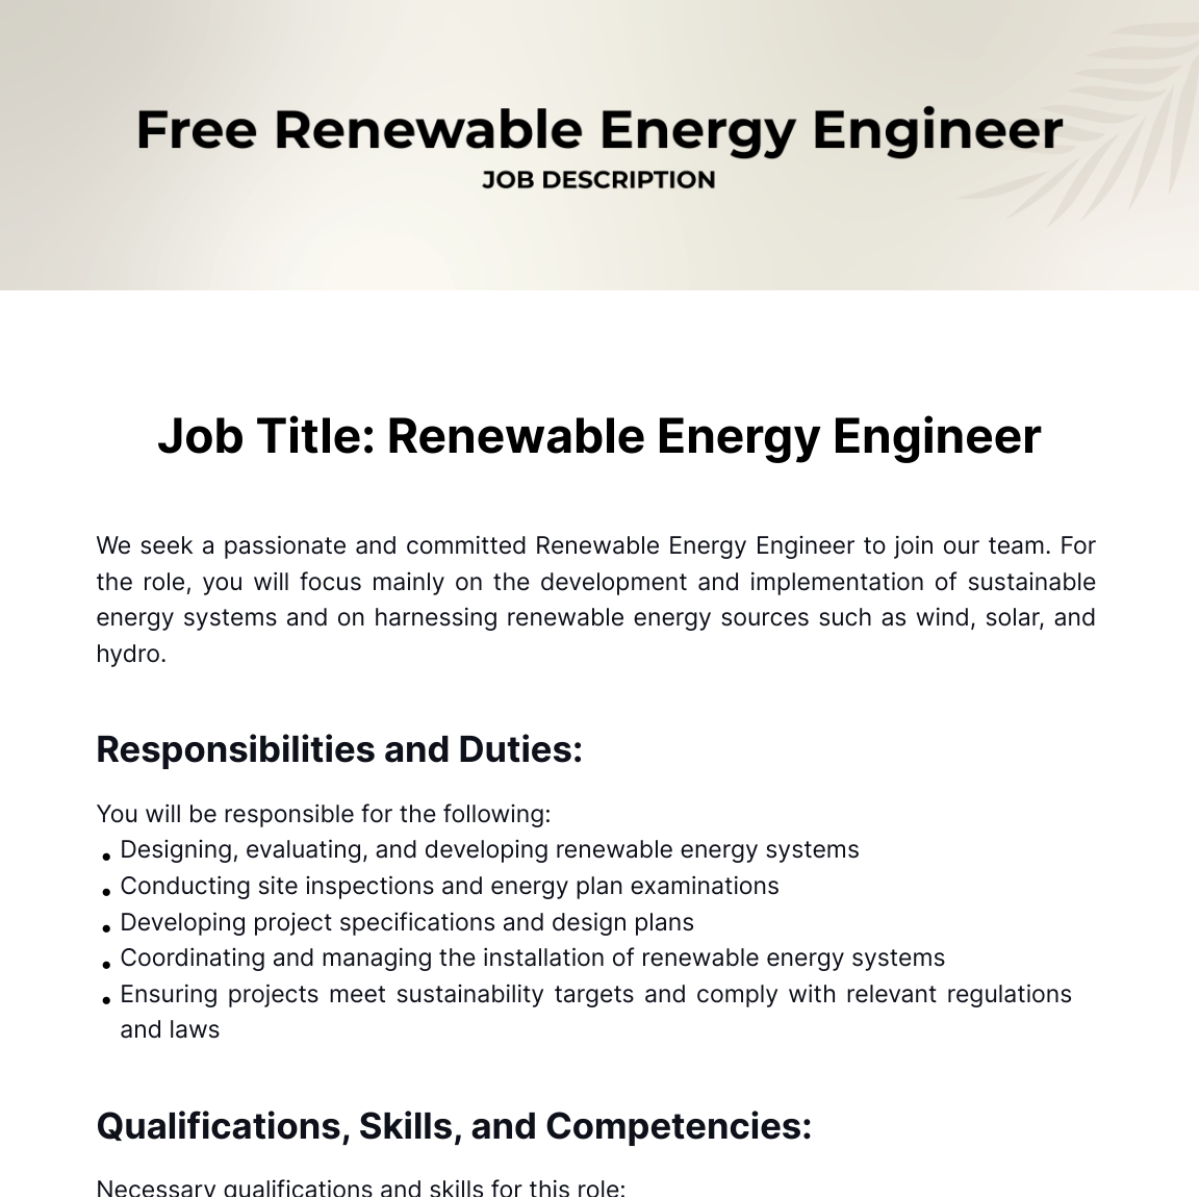 Free Renewable Energy Engineer Job Description Template